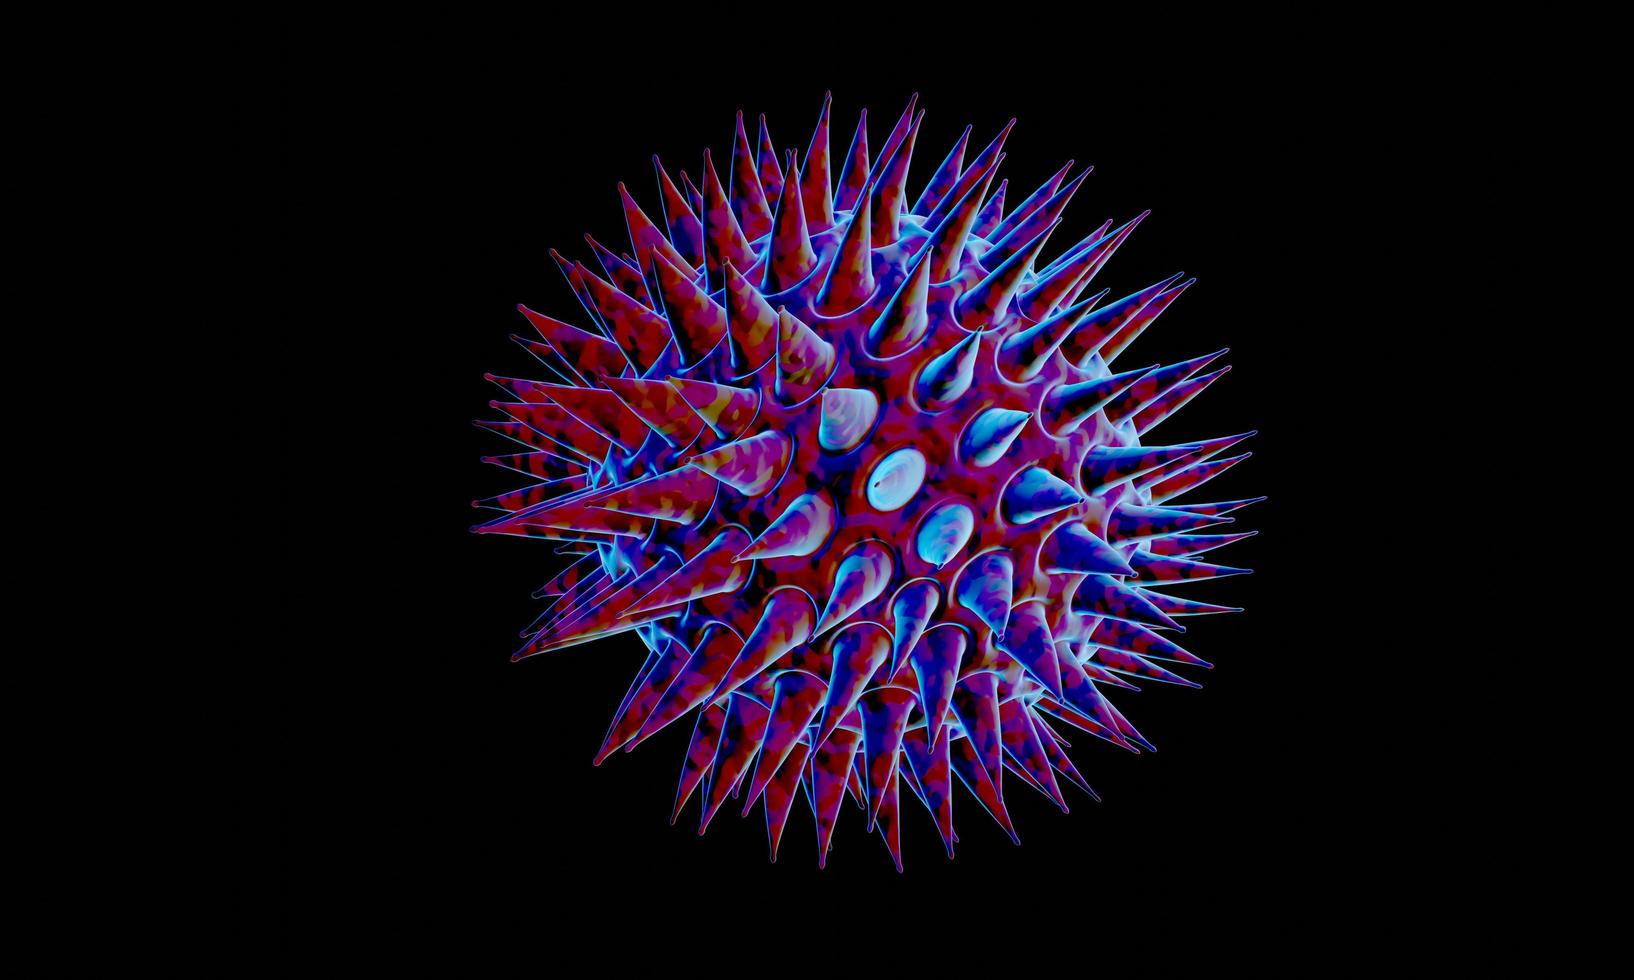 abstrakta bakterier eller virusceller i sfärisk form med långa antenner. coronavirus från wohun, Kina kriskoncept. pandemi eller virusinfektion koncept - 3D-rendering. foto